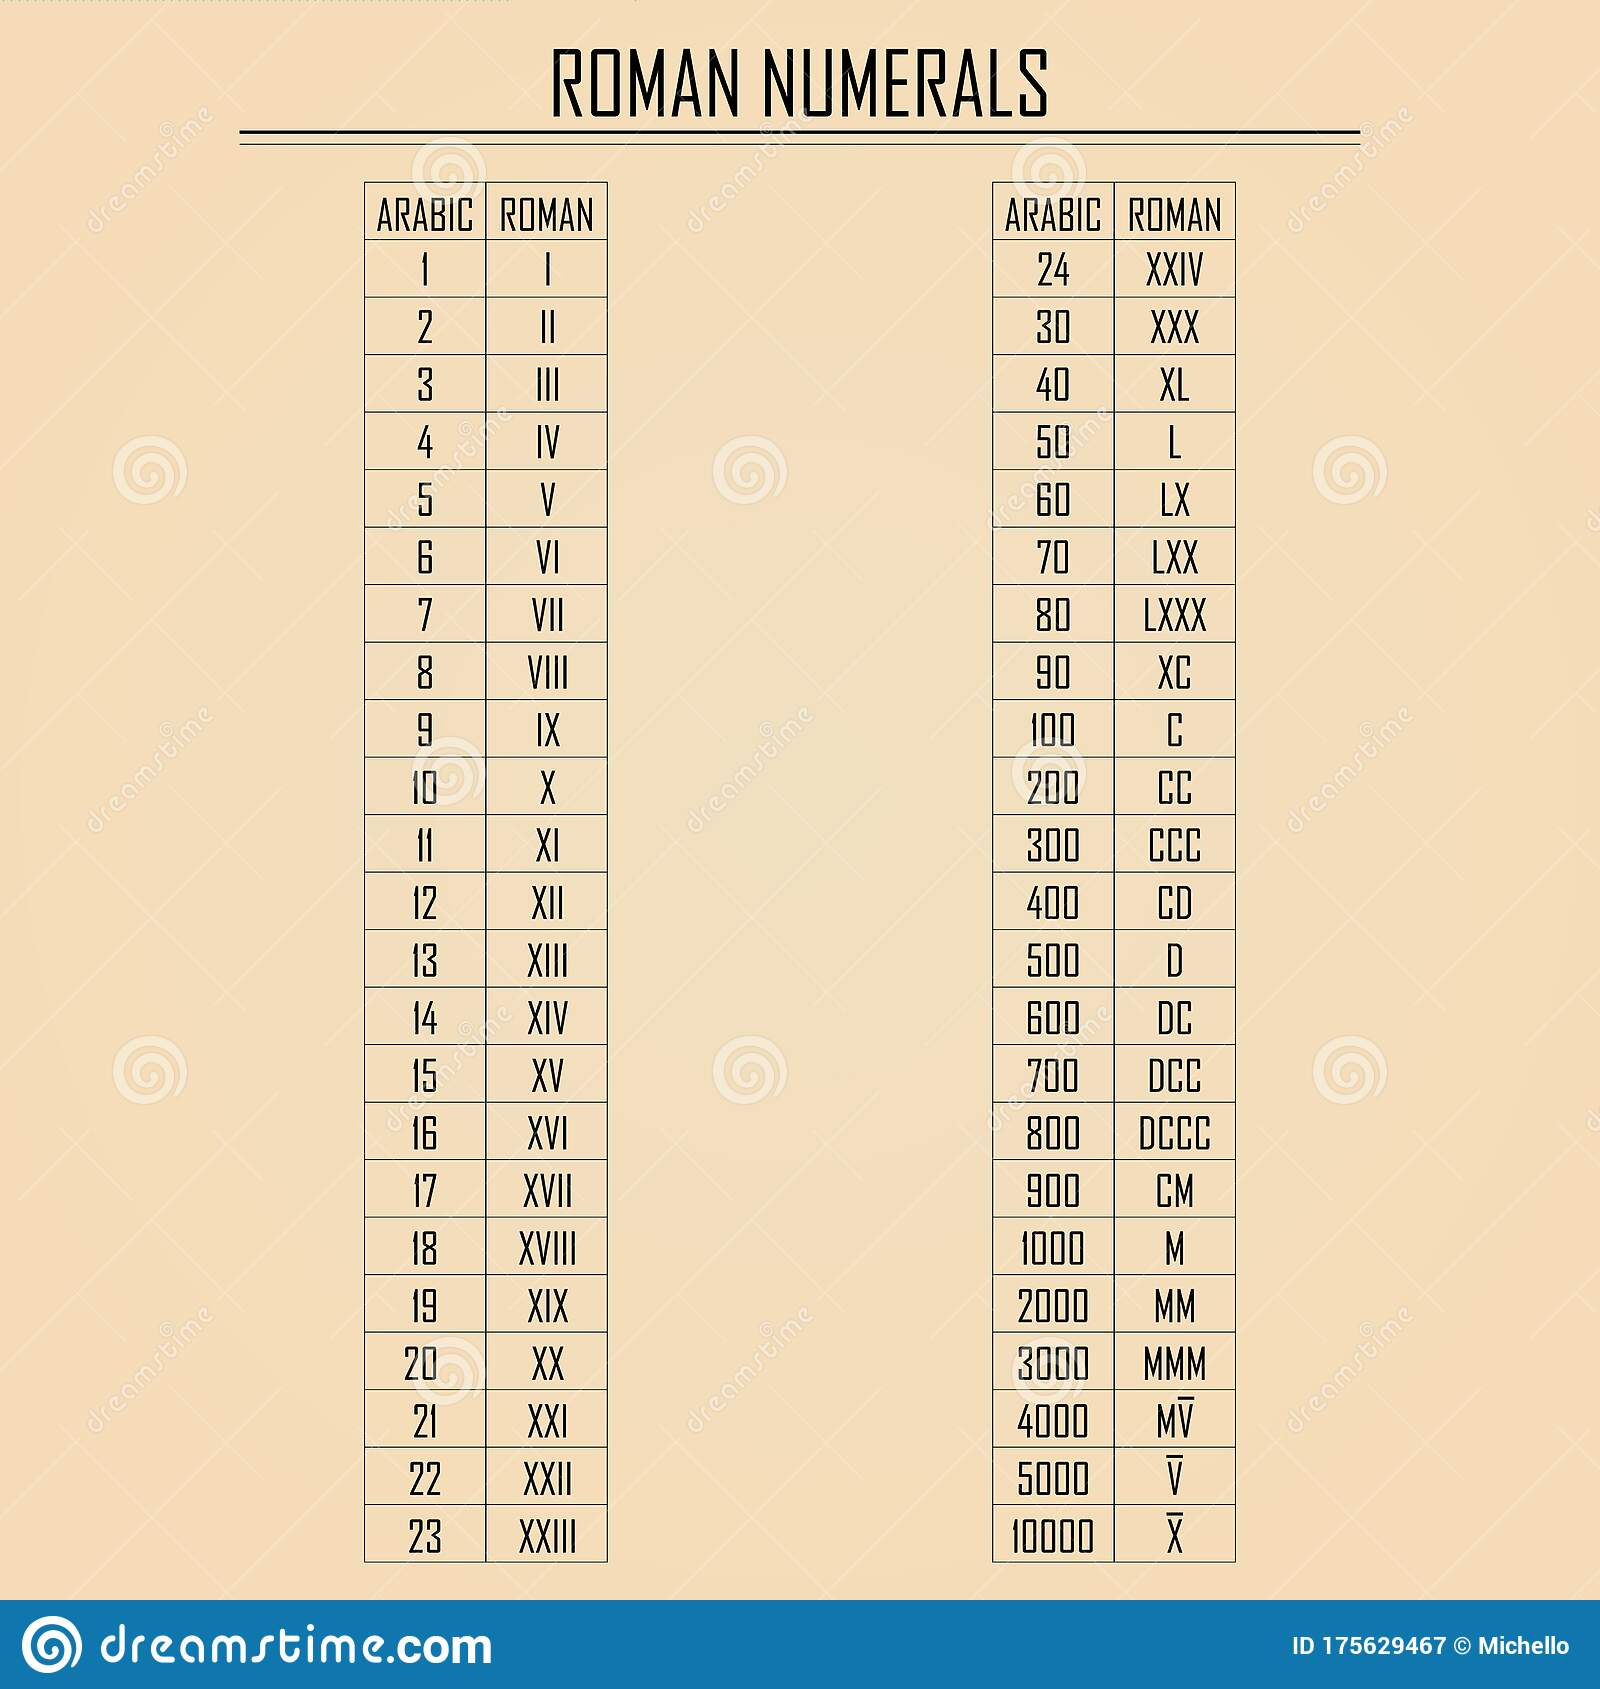 Arabic Vs Roman Numerals Chart Simple Illustration Teaching Values Of